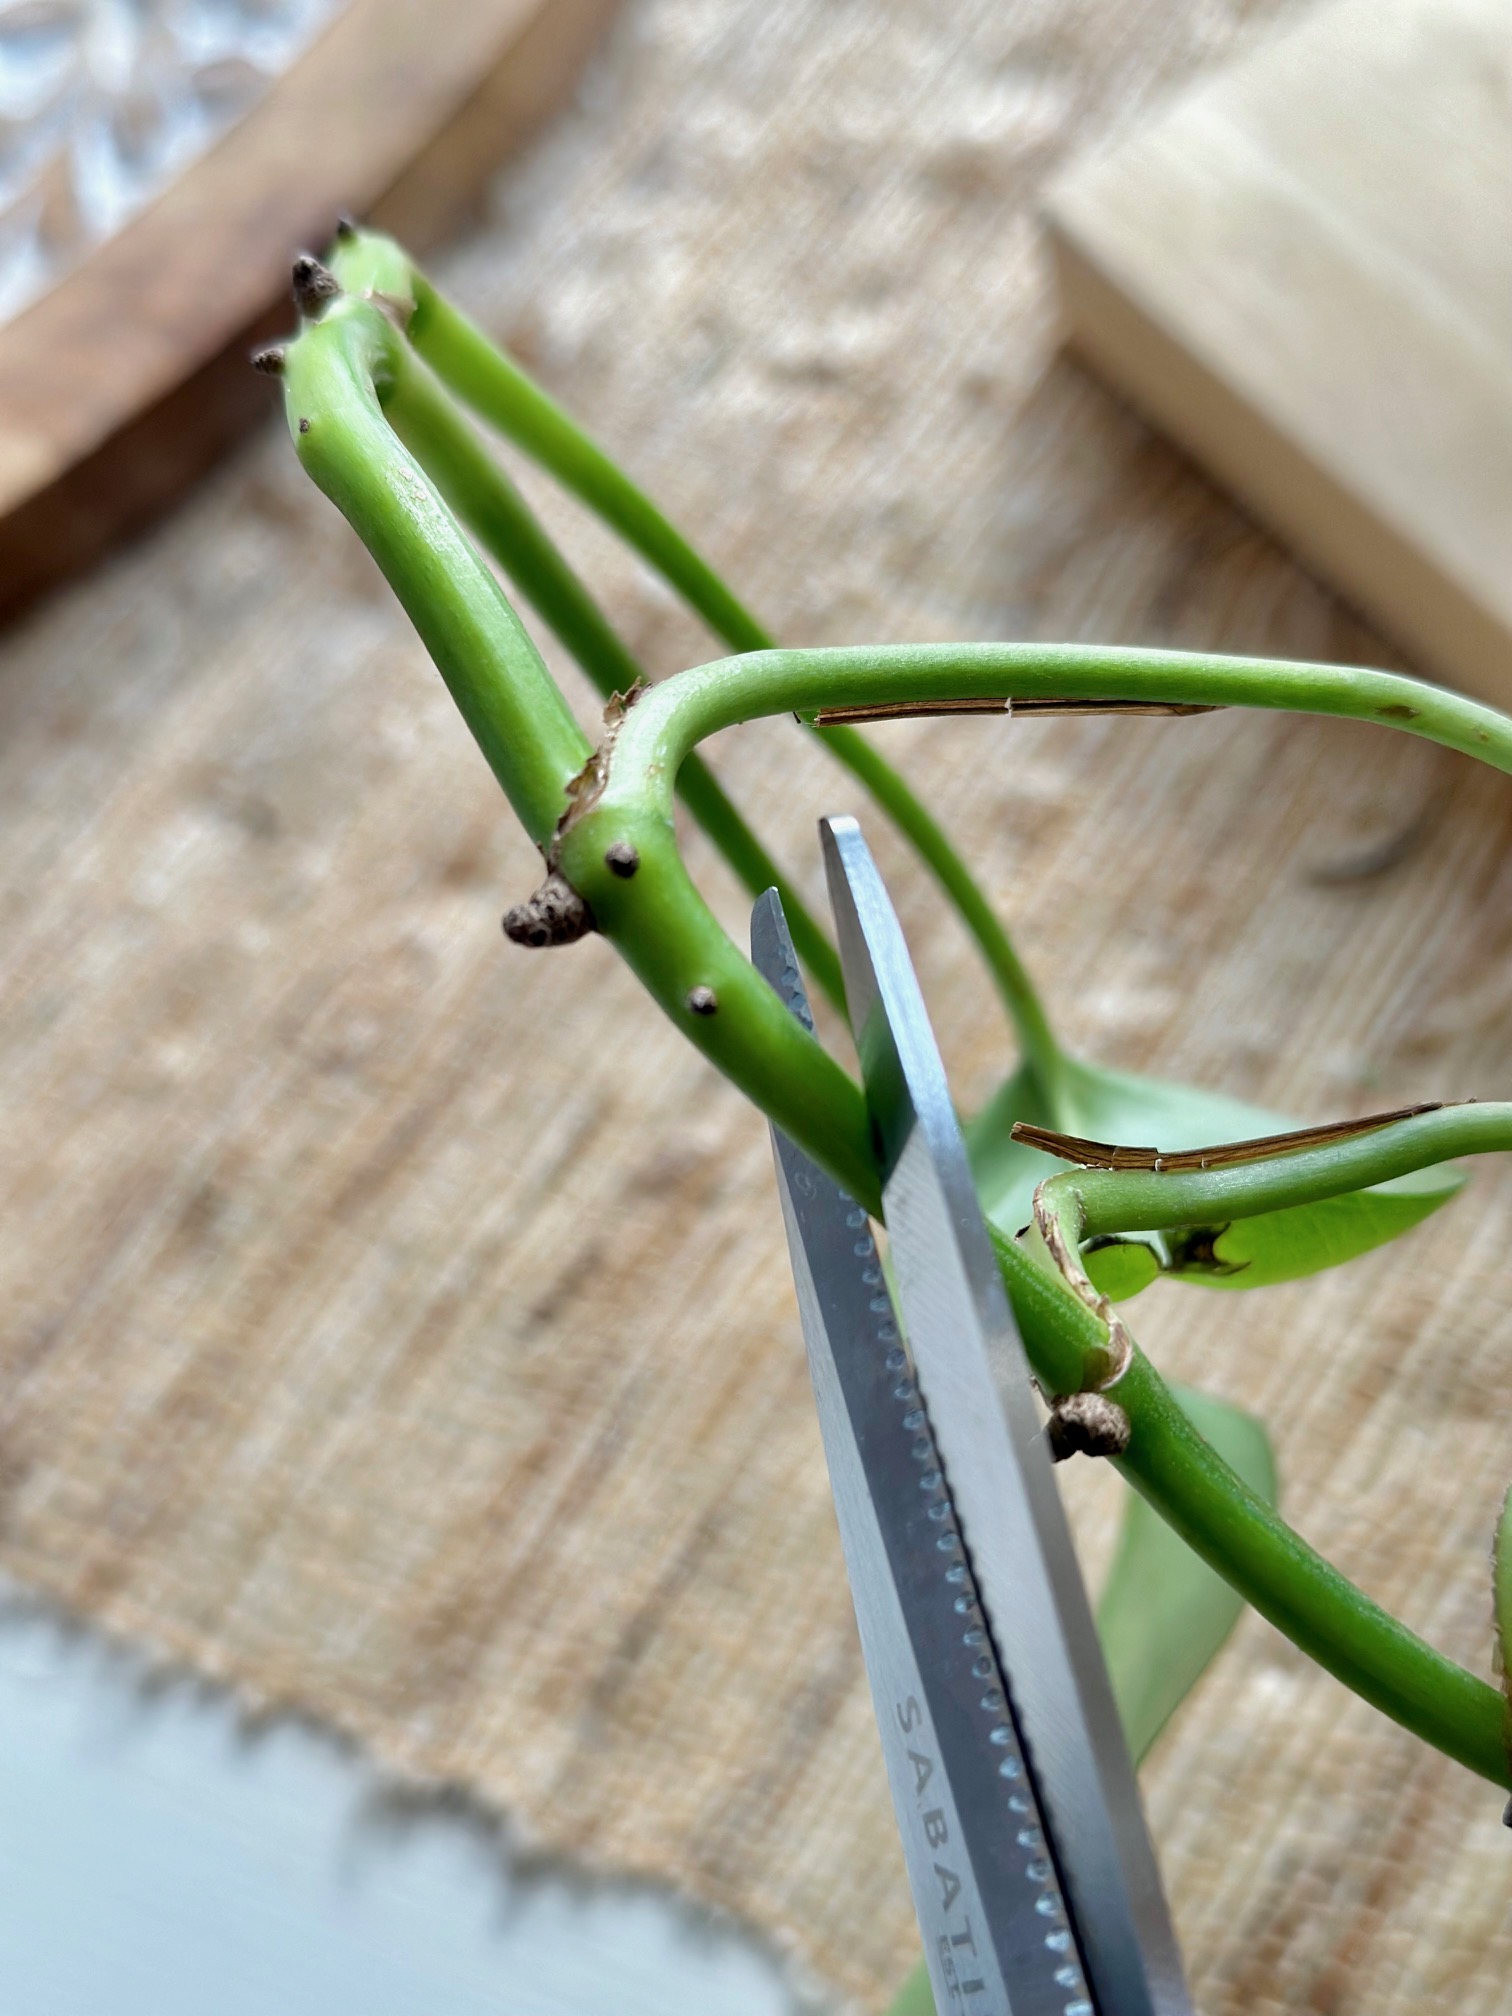 Cutting the stem with sharp scissors. 